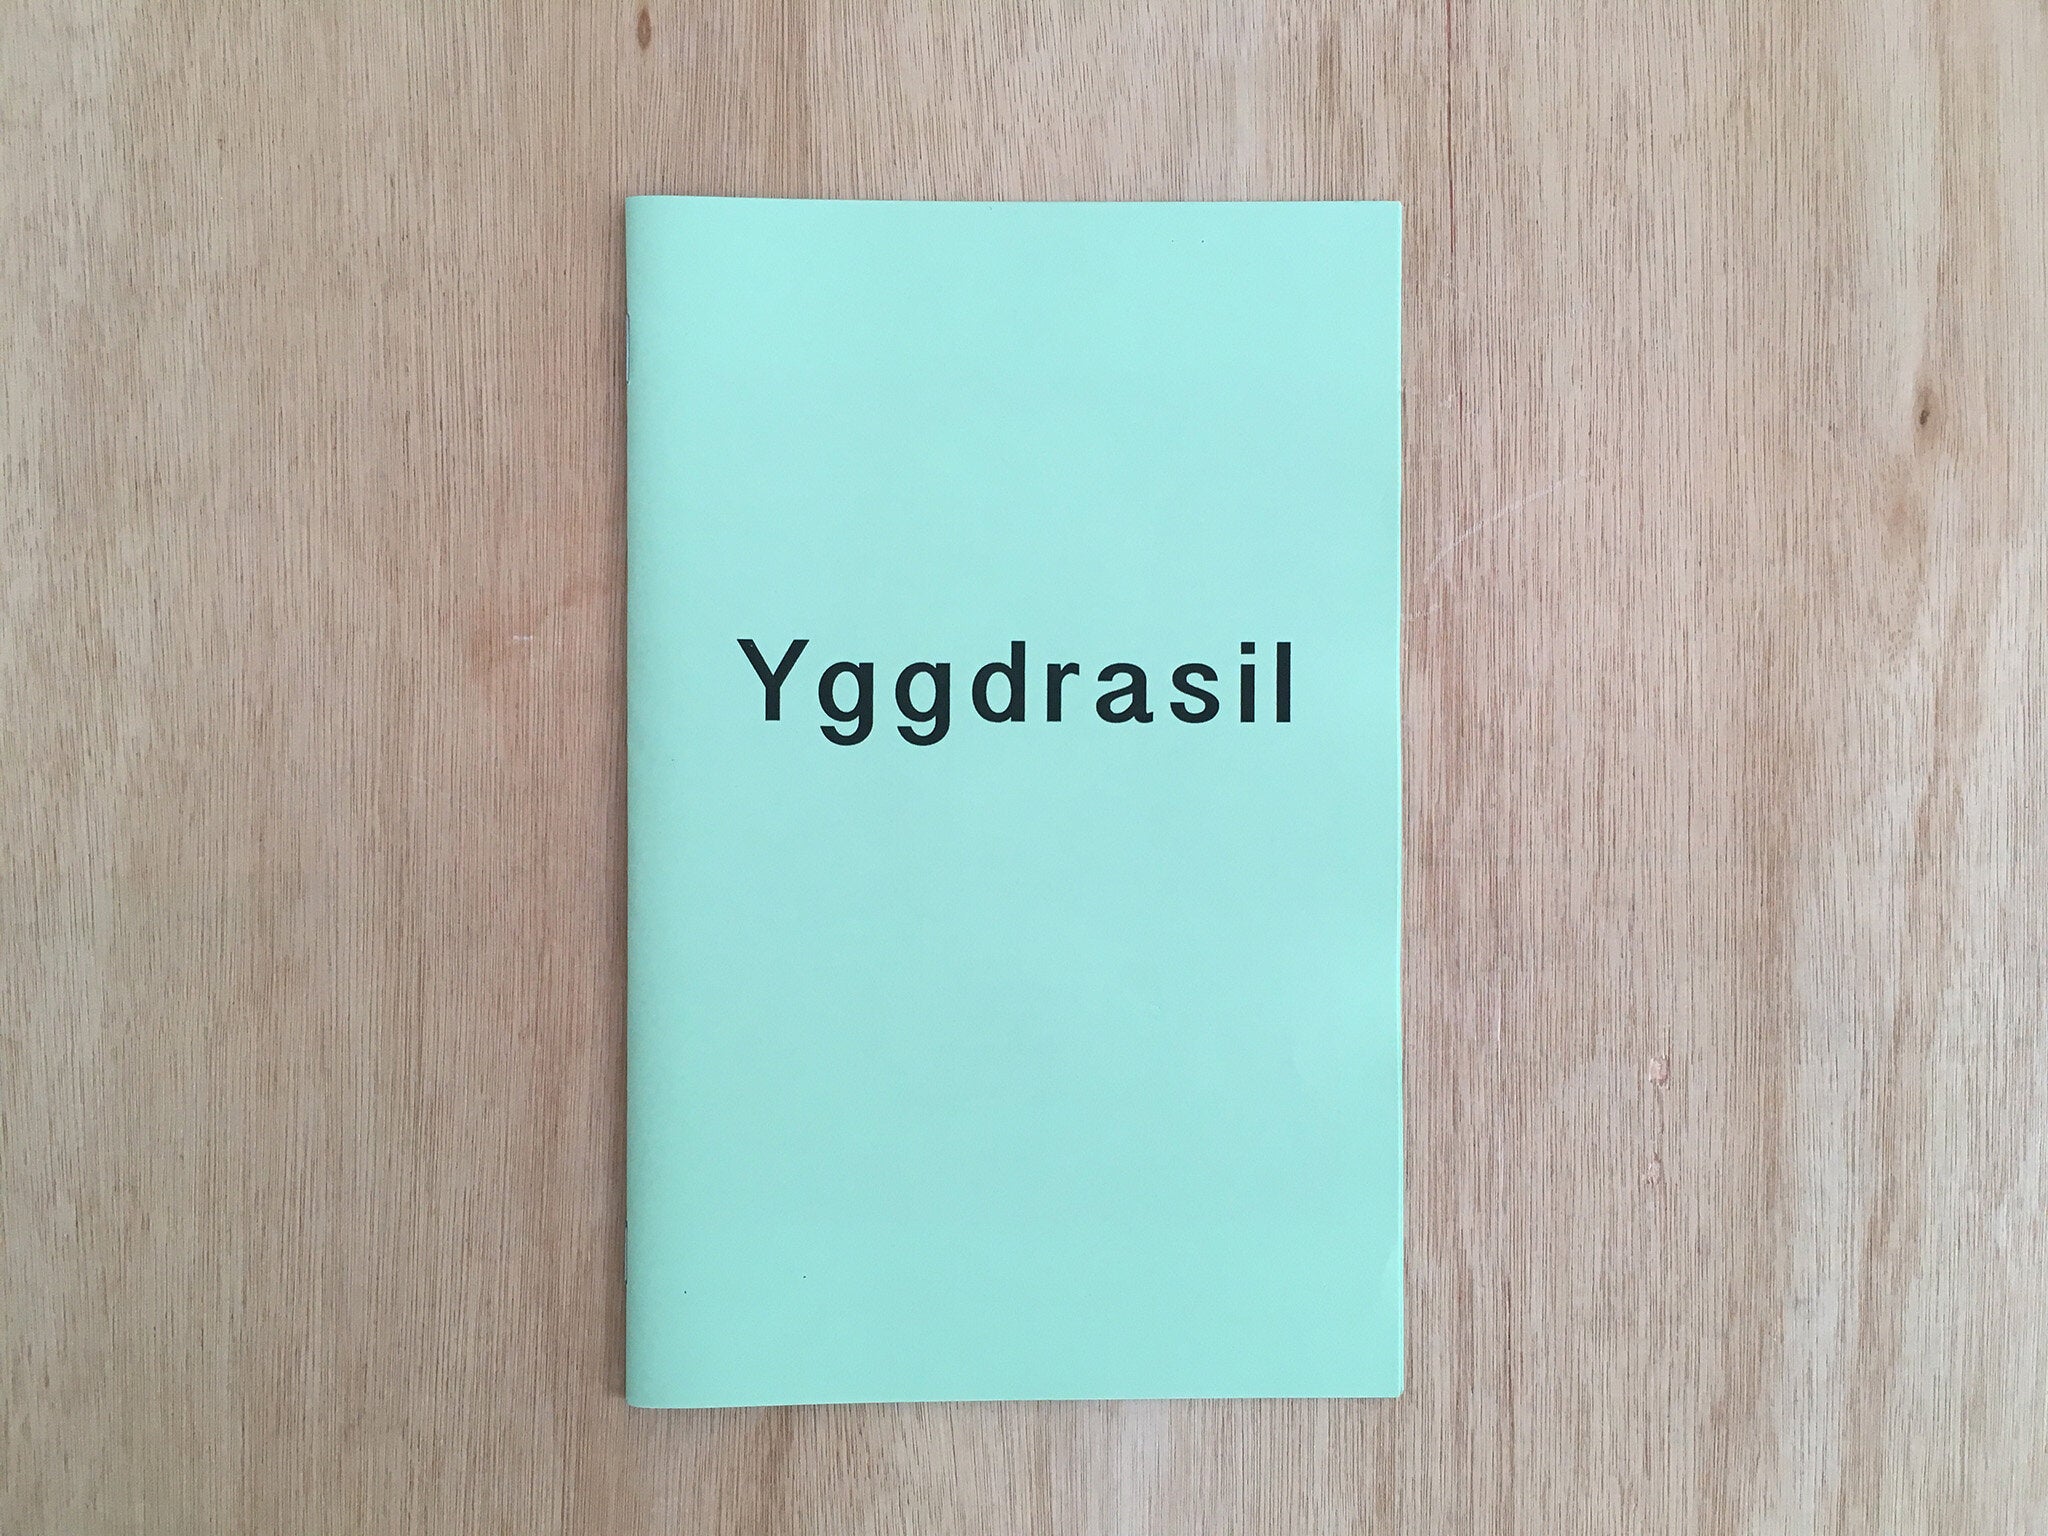 YGGDRASIL by Reuben Lorch-Miller